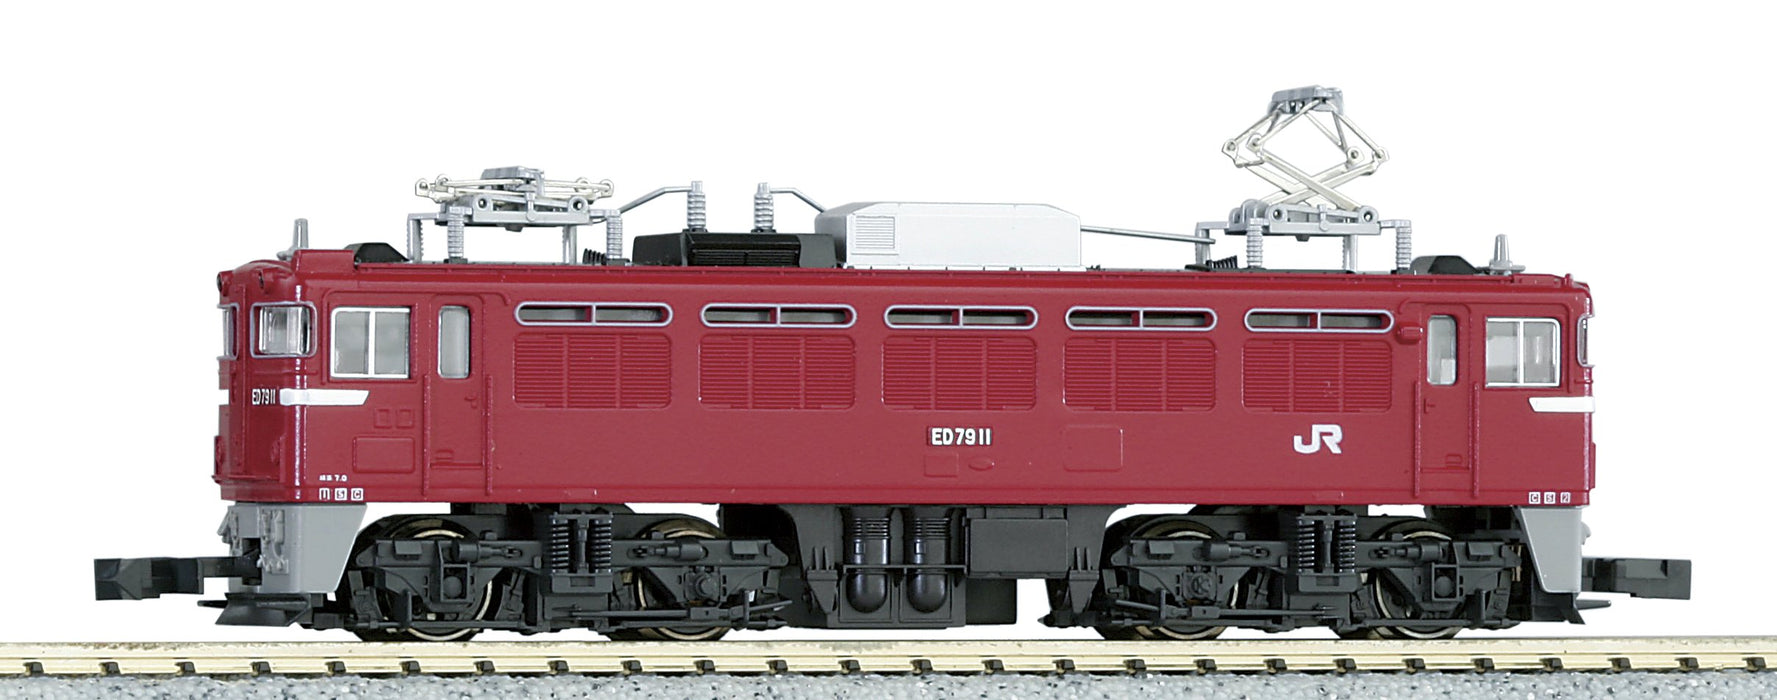 Kato N Gauge 3031 Ed79 High-Quality Model Train